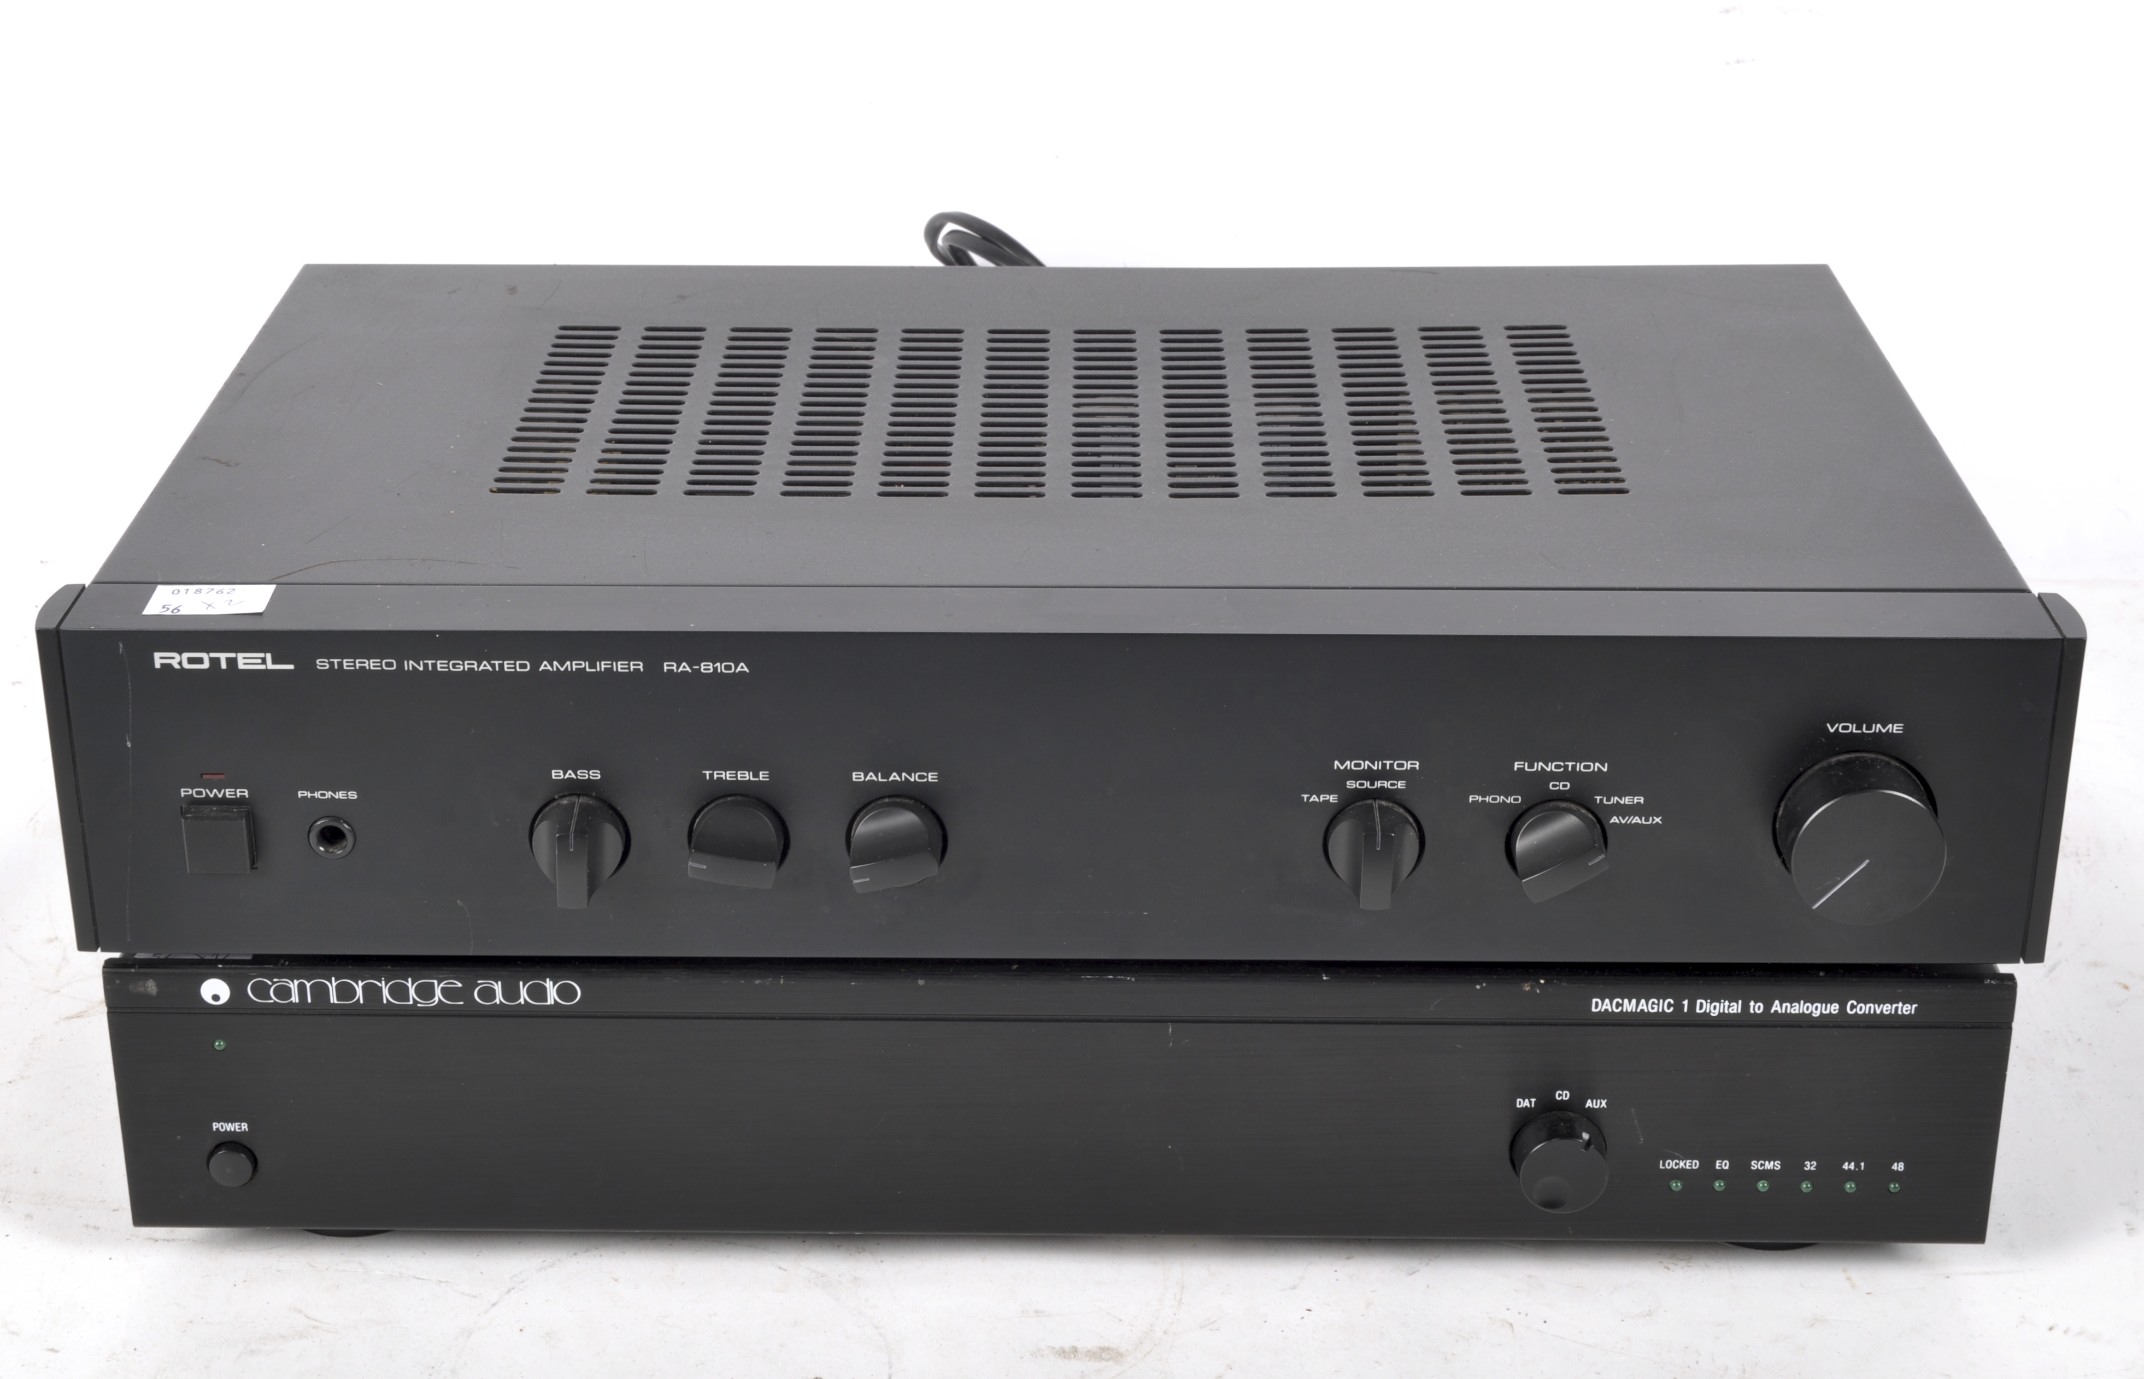 A Cambridge Audio analogue converter DACMAGIC 1, serial number MDAC101583,